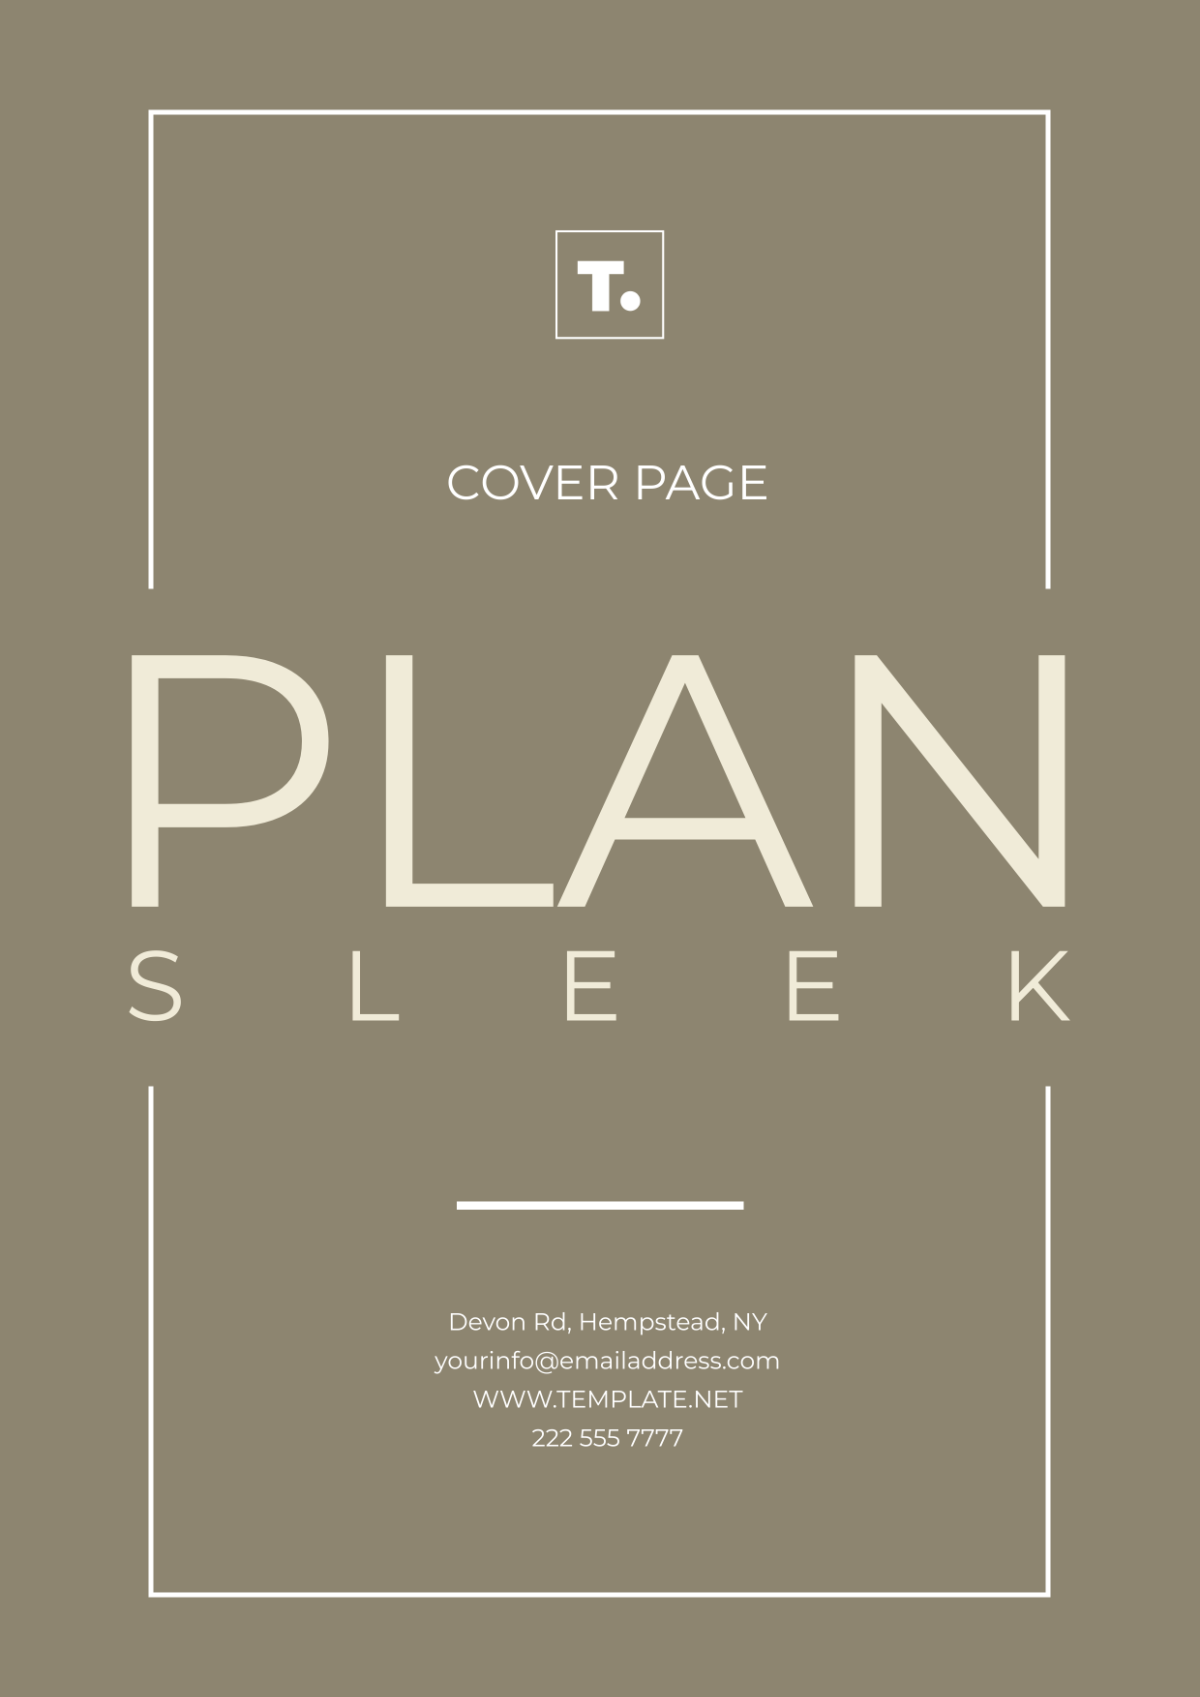 Plan Sleek Cover Page